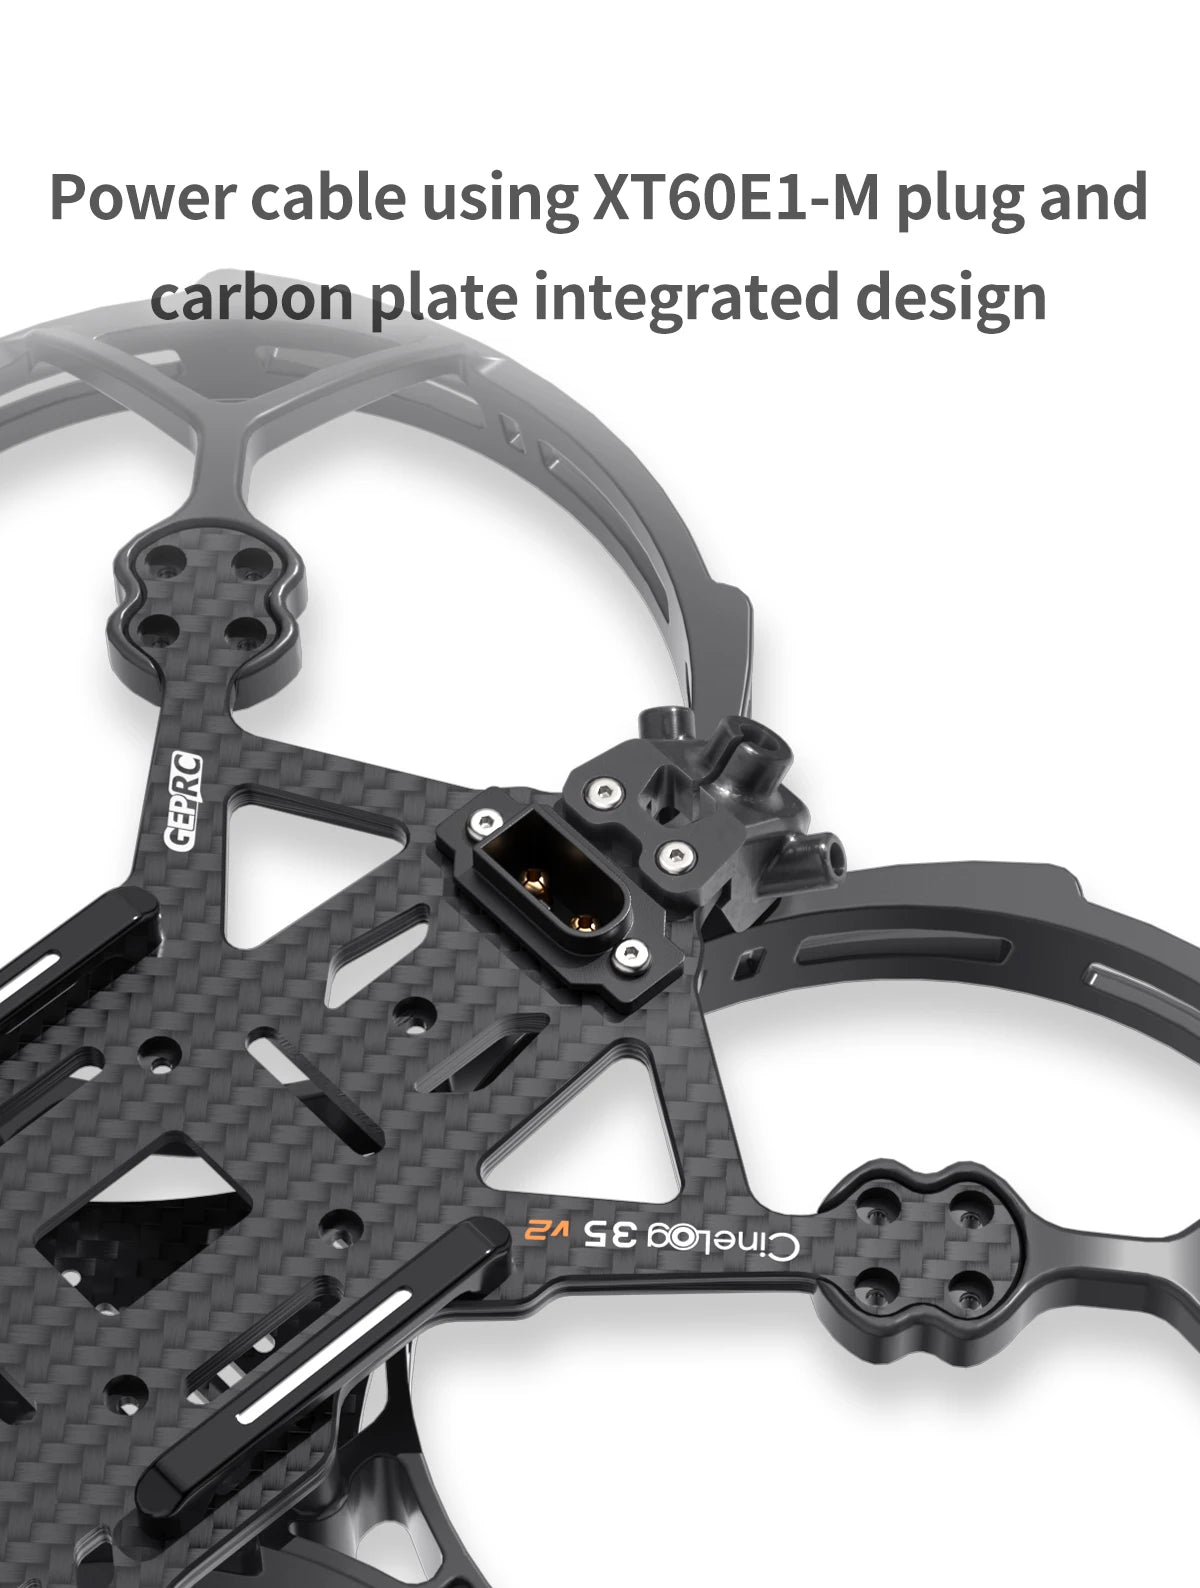 XTGOEL-M plug carbon plate integrated design 2 s8 6018